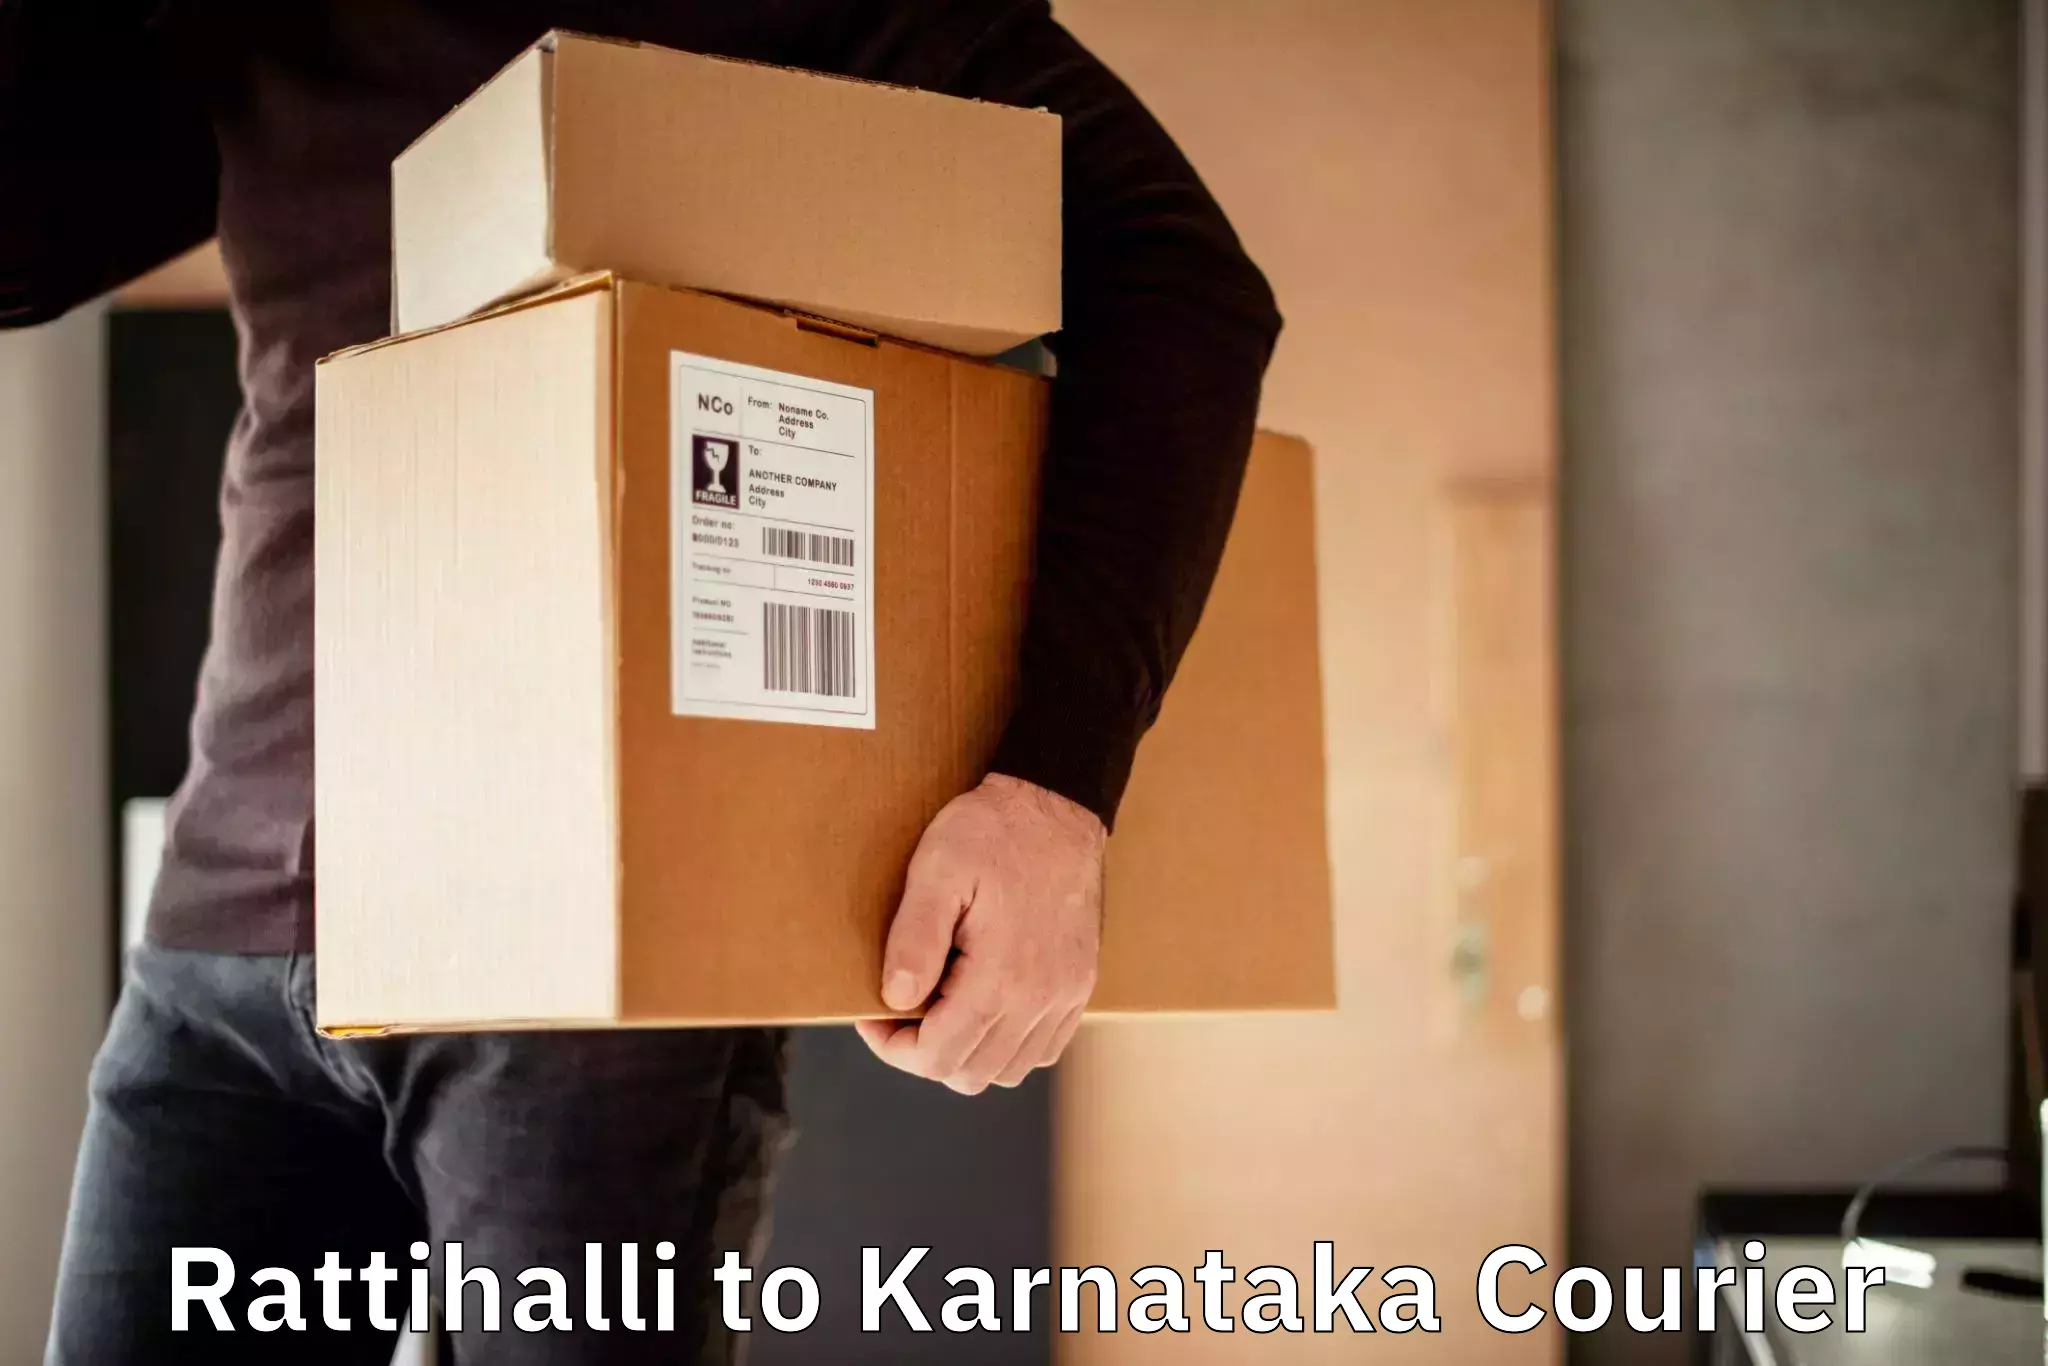 Personalized courier experiences Rattihalli to Anavatti